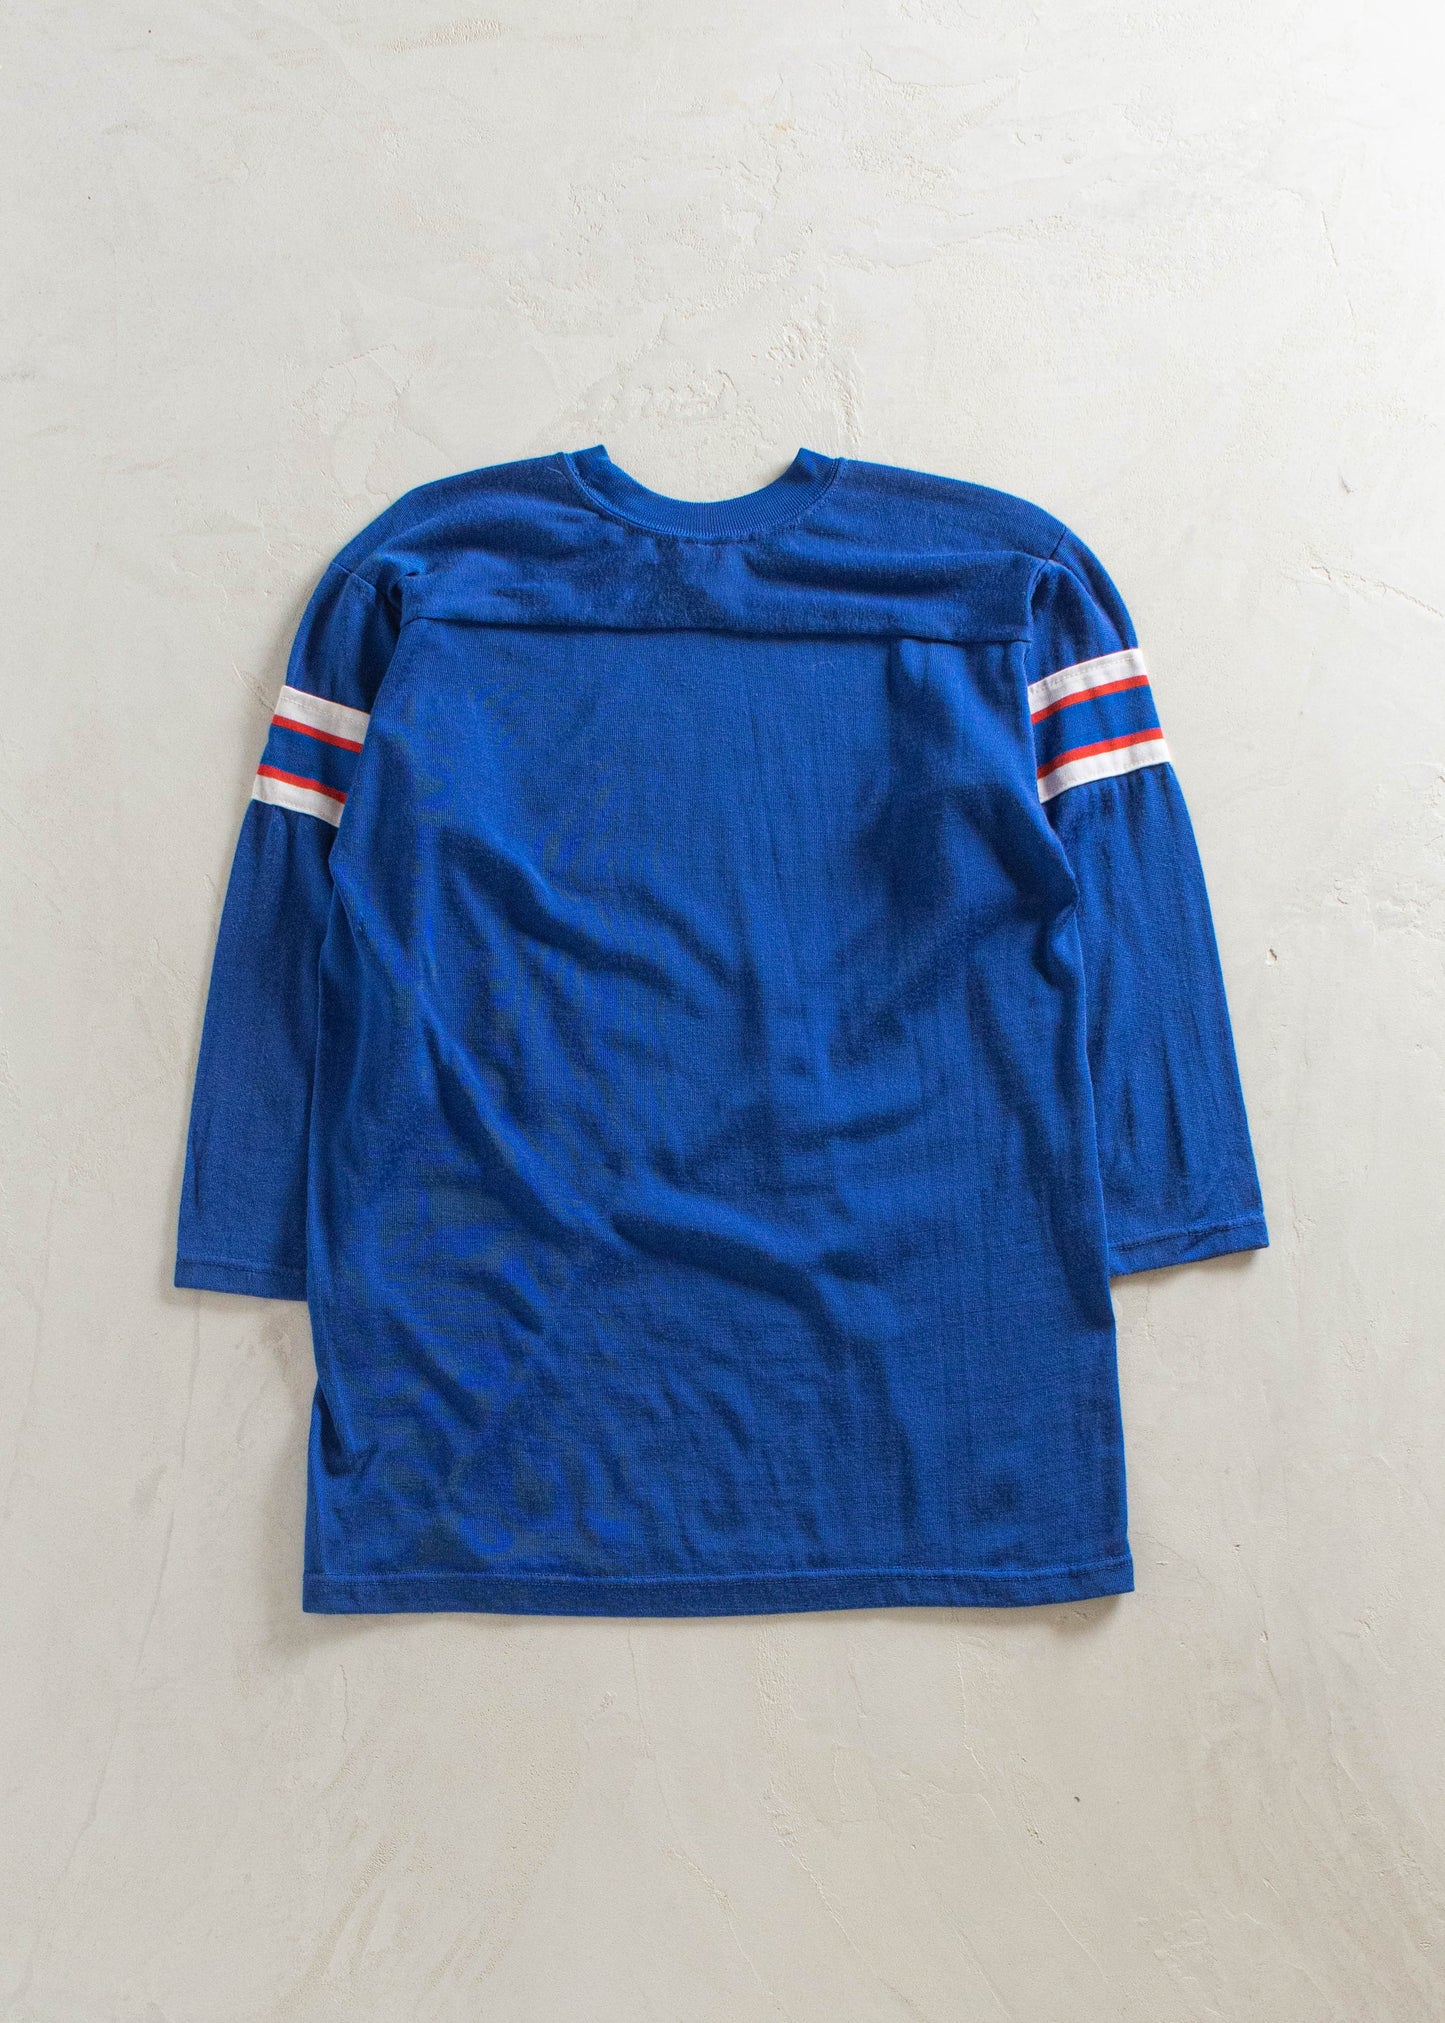 1980s Venus Athletic Uniform 3/4 Sleeve Sport Jersey Size S/M